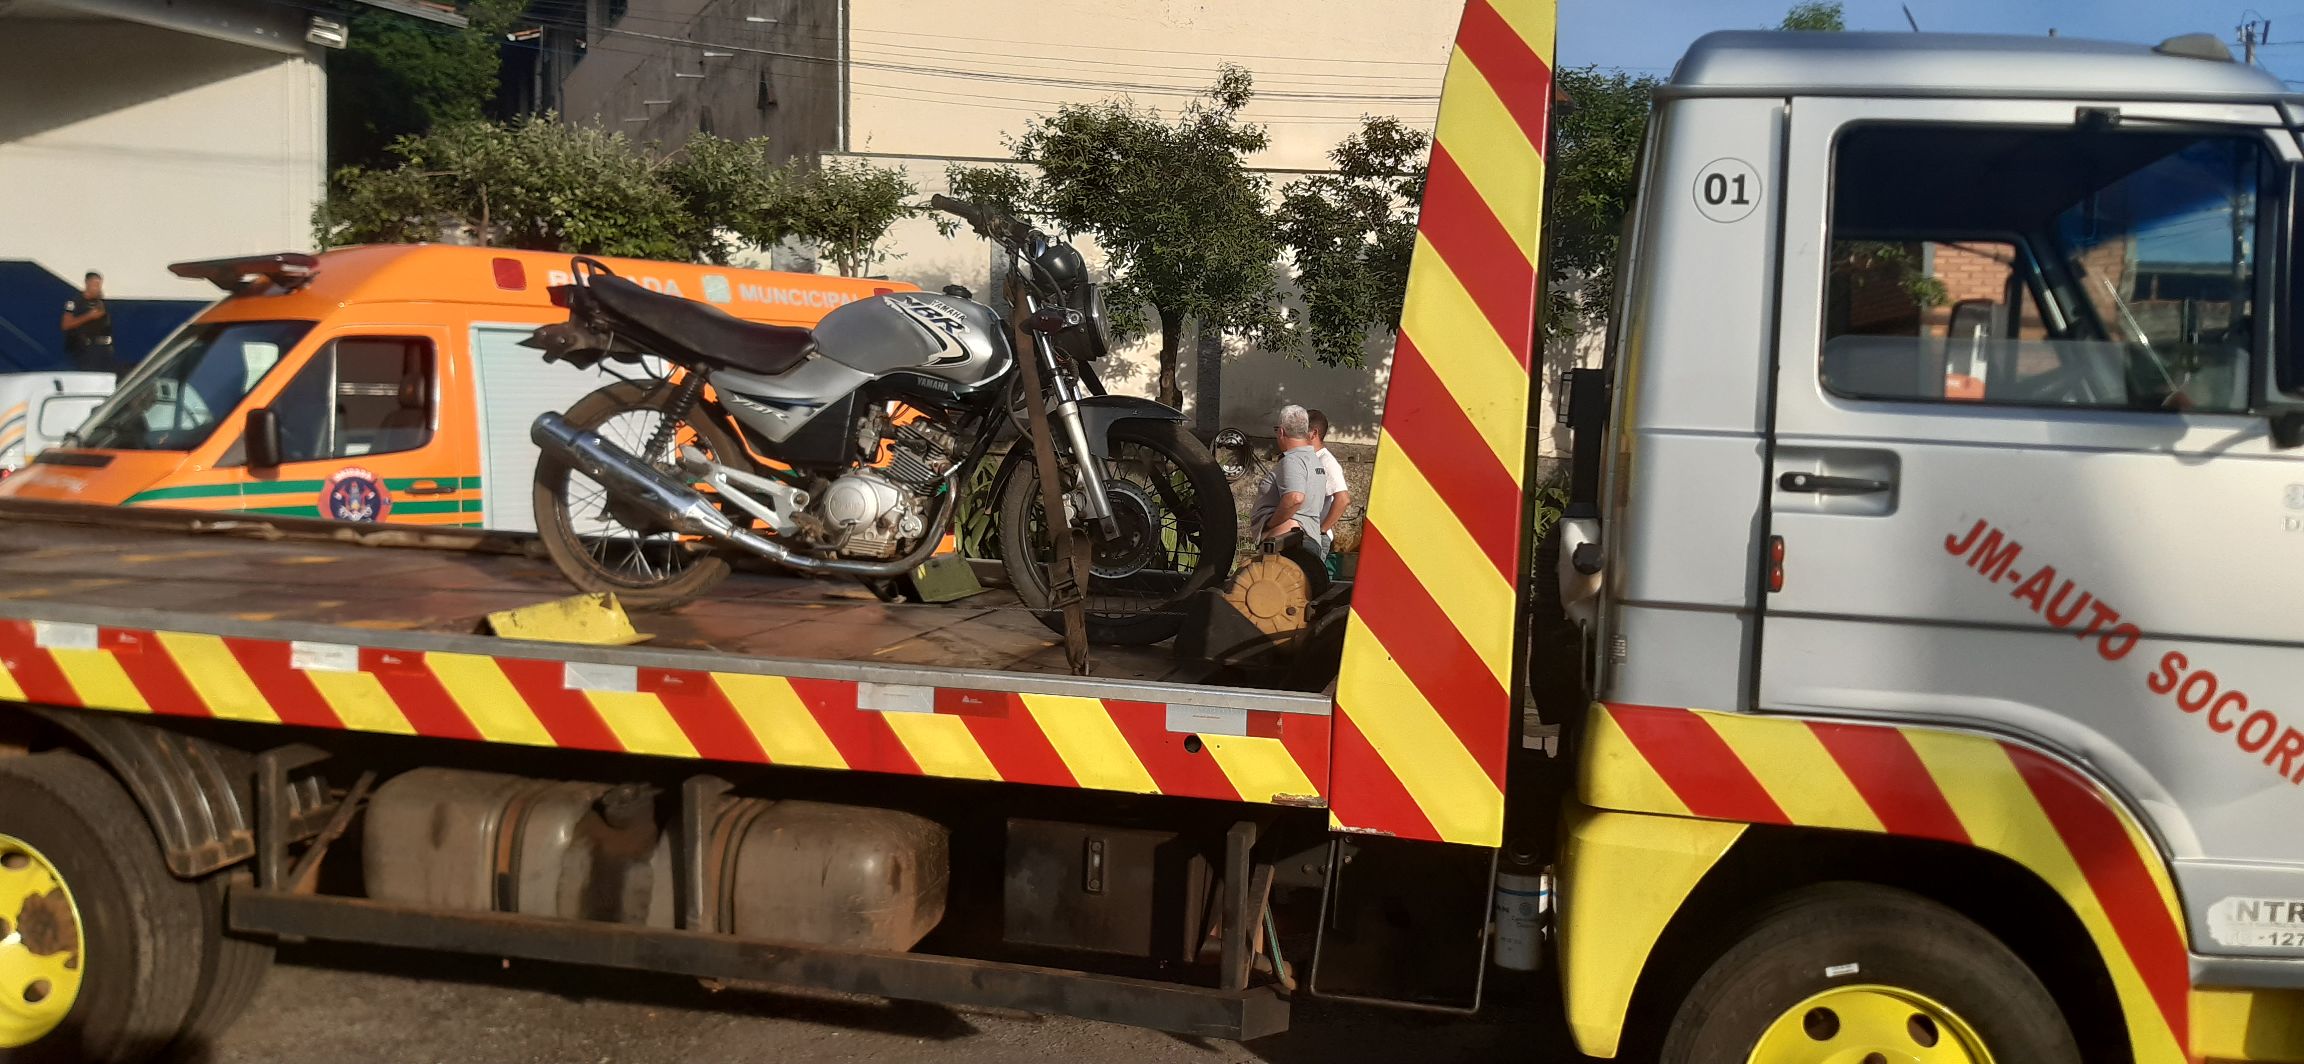 Guarda Civil de Itabirito prende condutor de moto, inabilitado, por direção perigosa